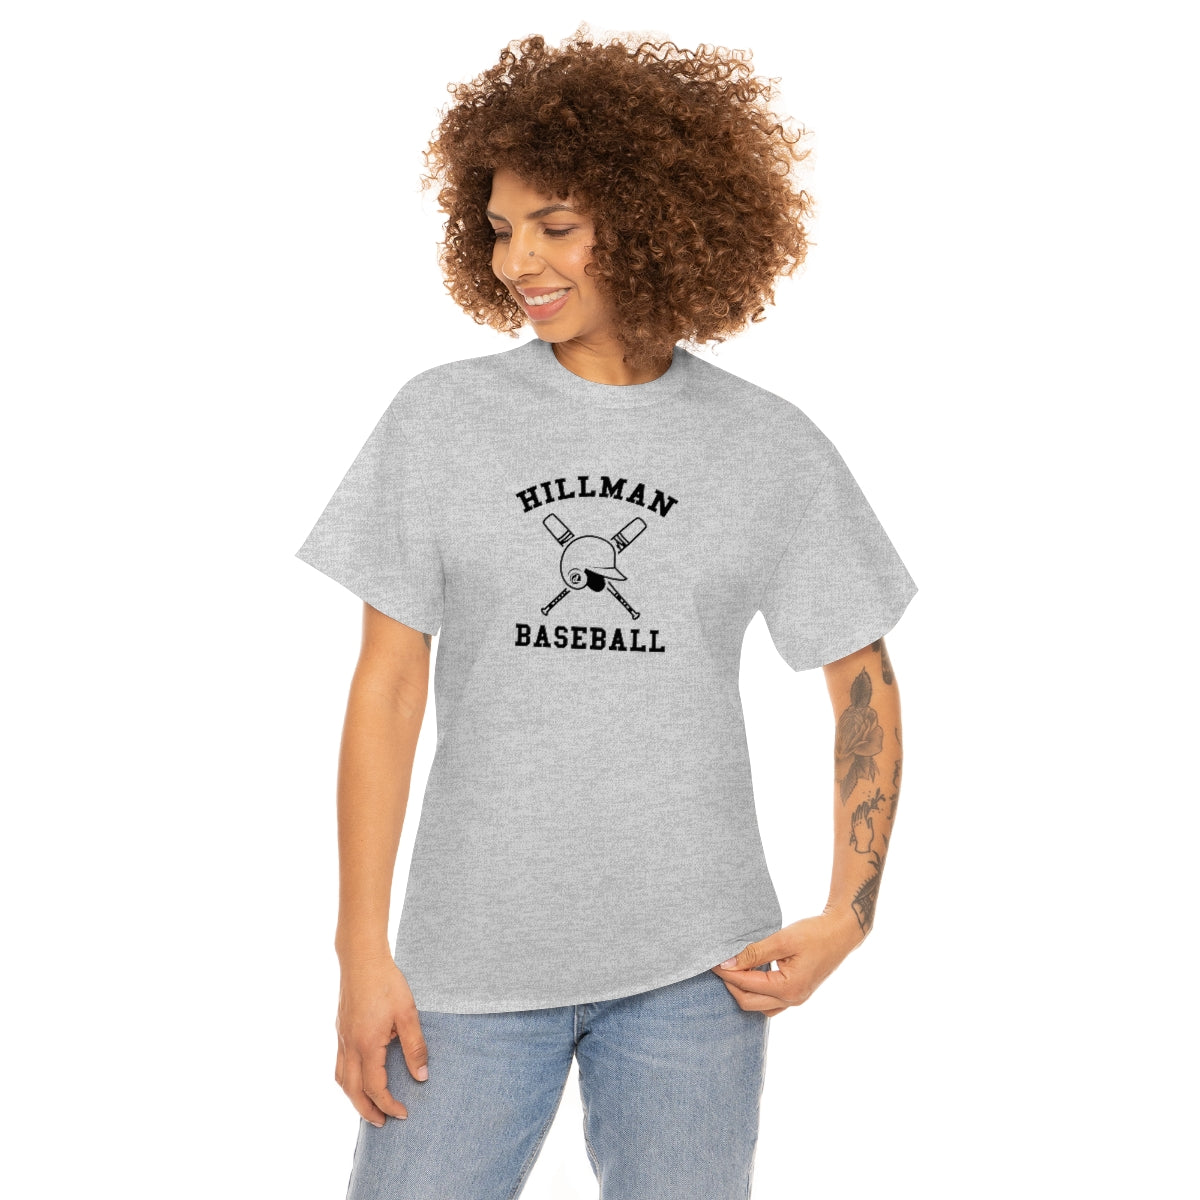 Hillman Baseball: Black Lettering Unisex Short Sleeve Tee